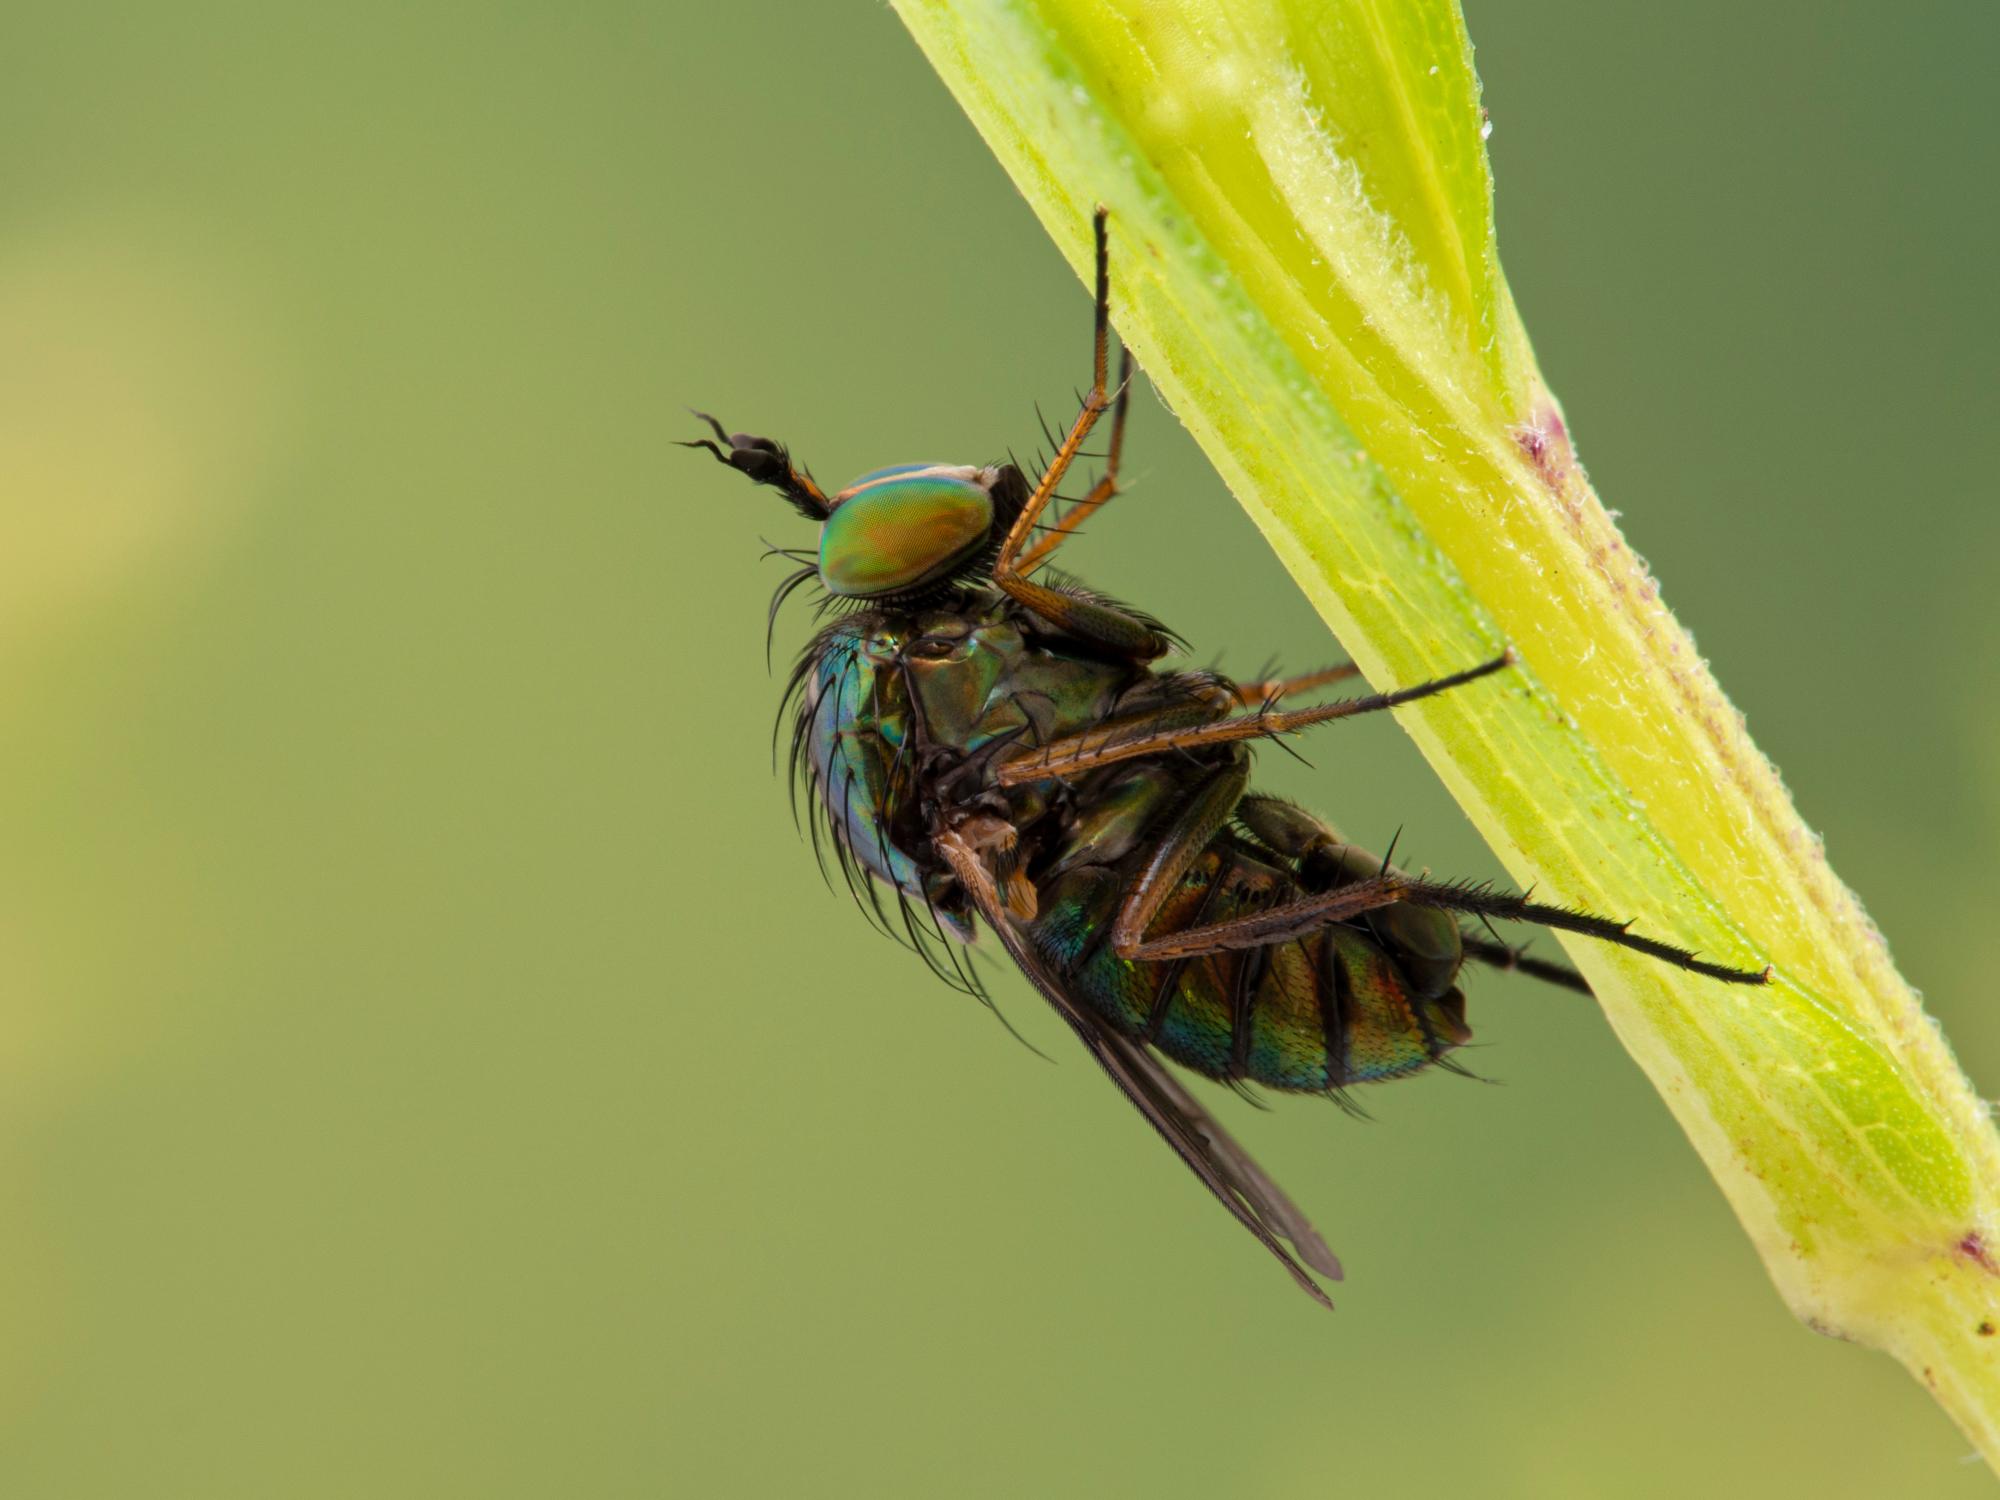 Long-legged marsh fly on a blade of grass